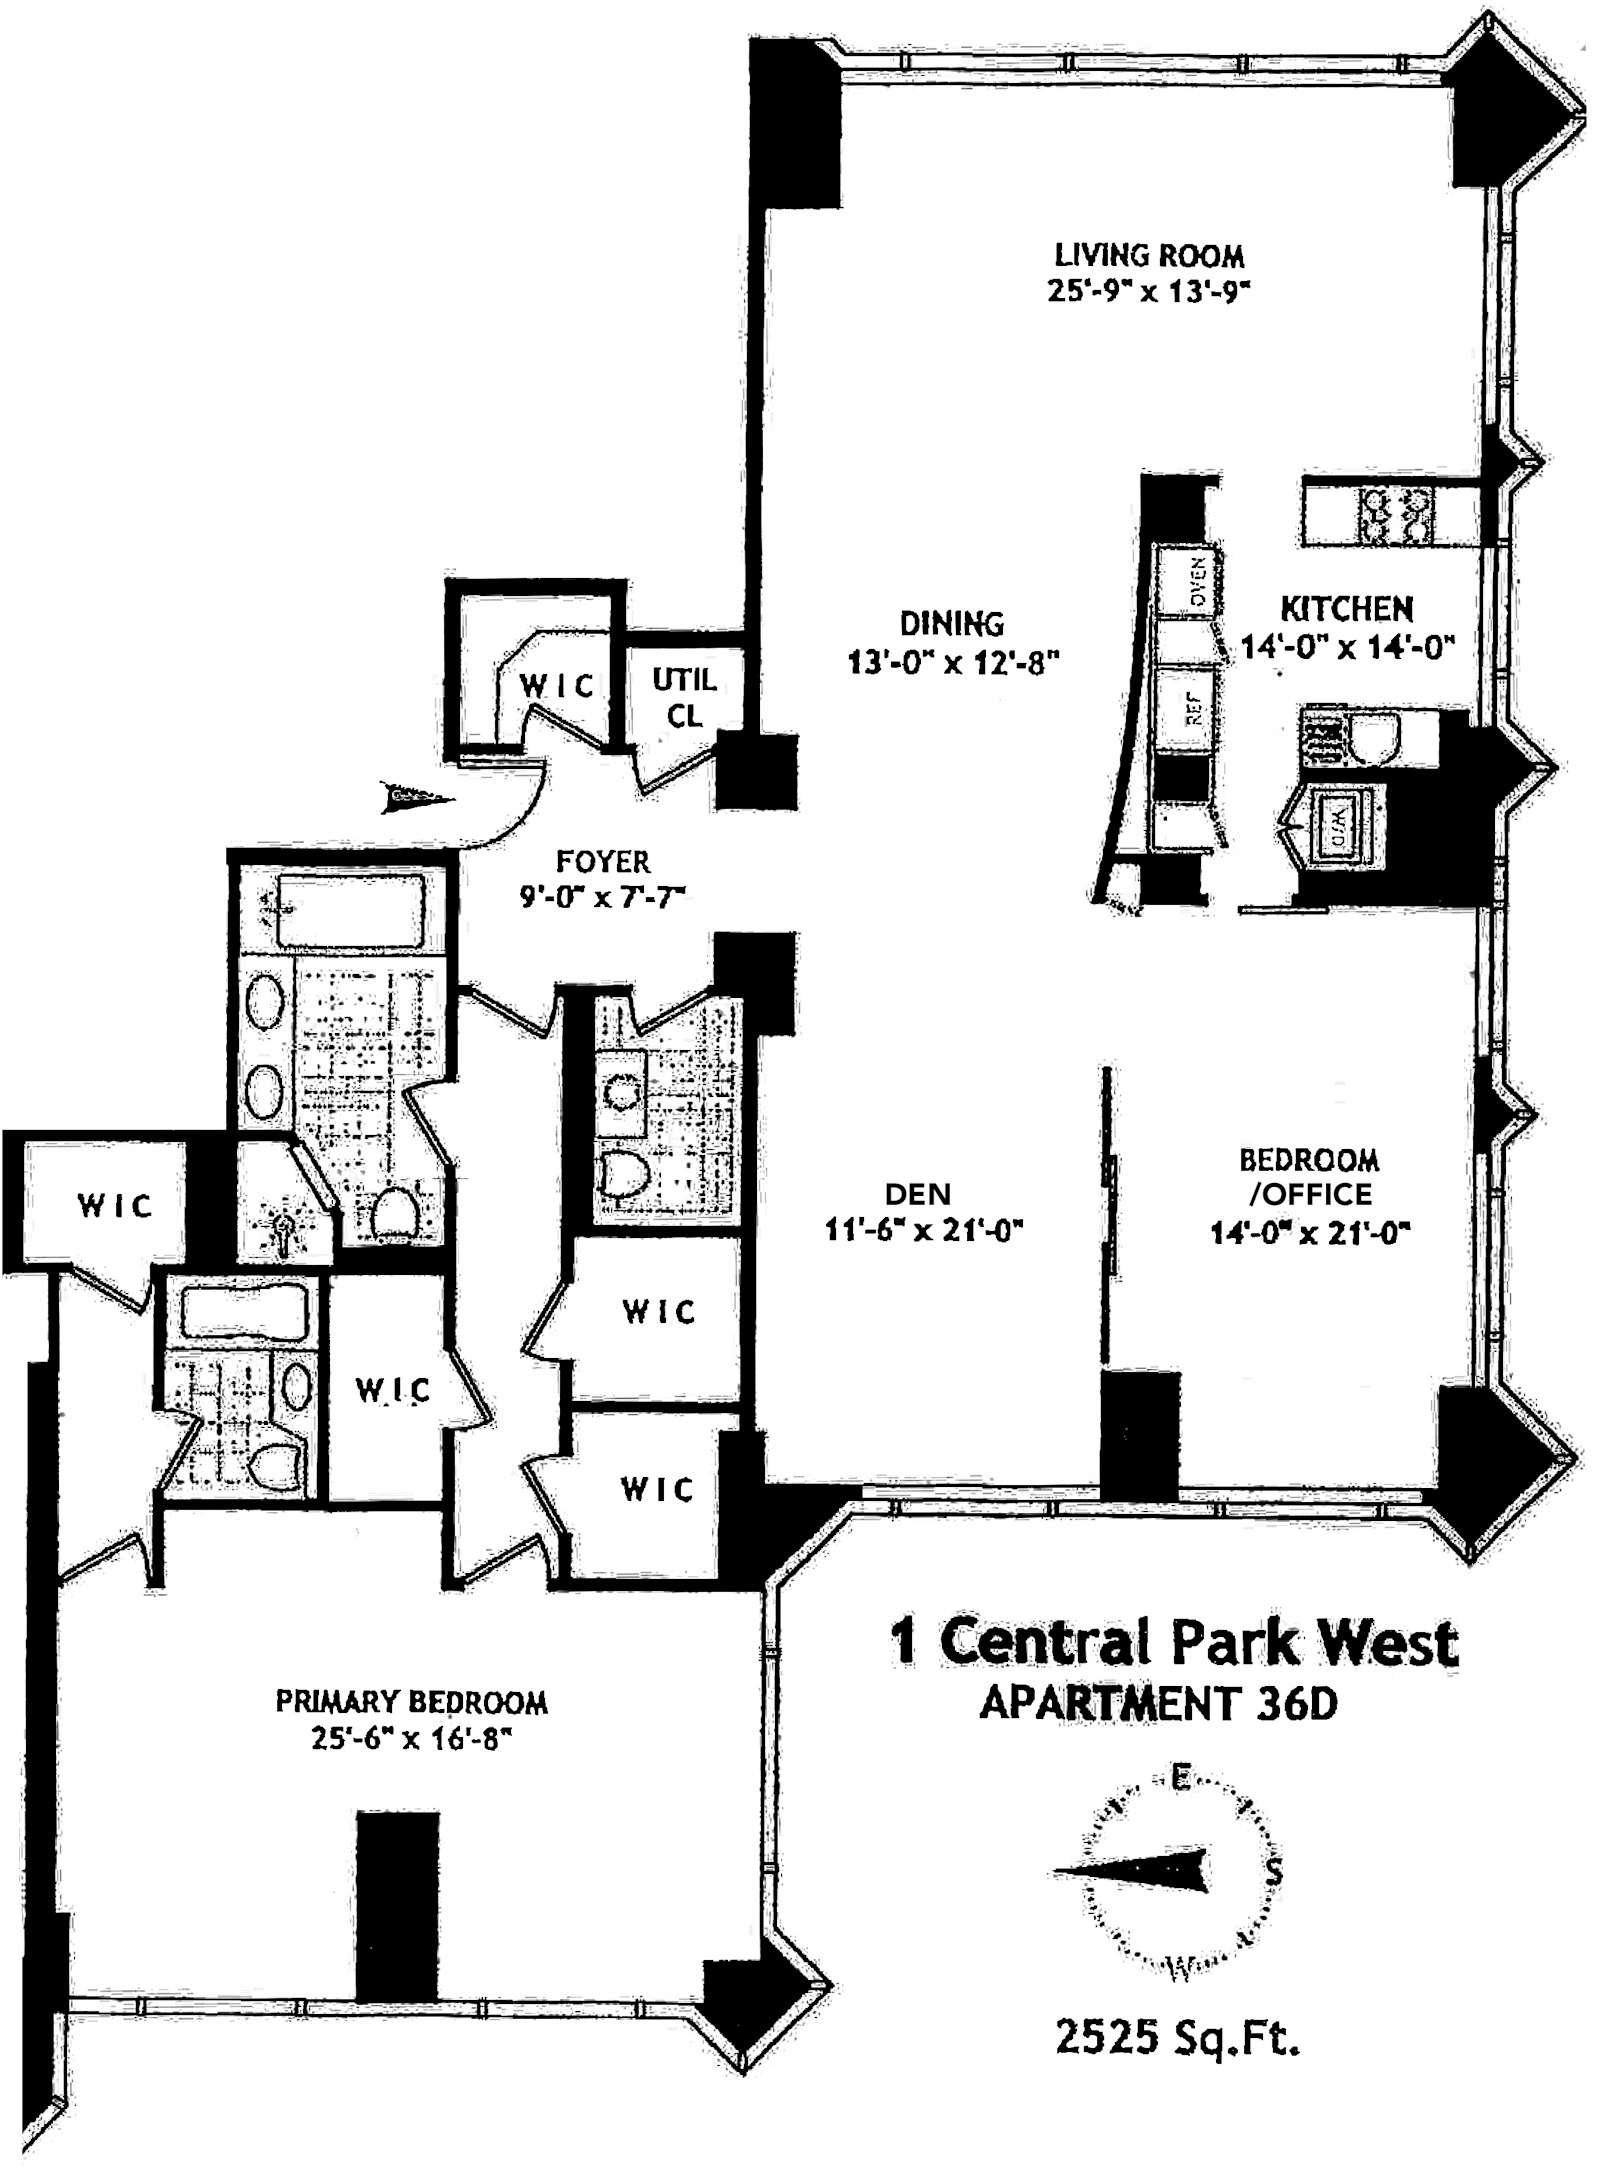 Floorplan for 1 Central Park West, 36D